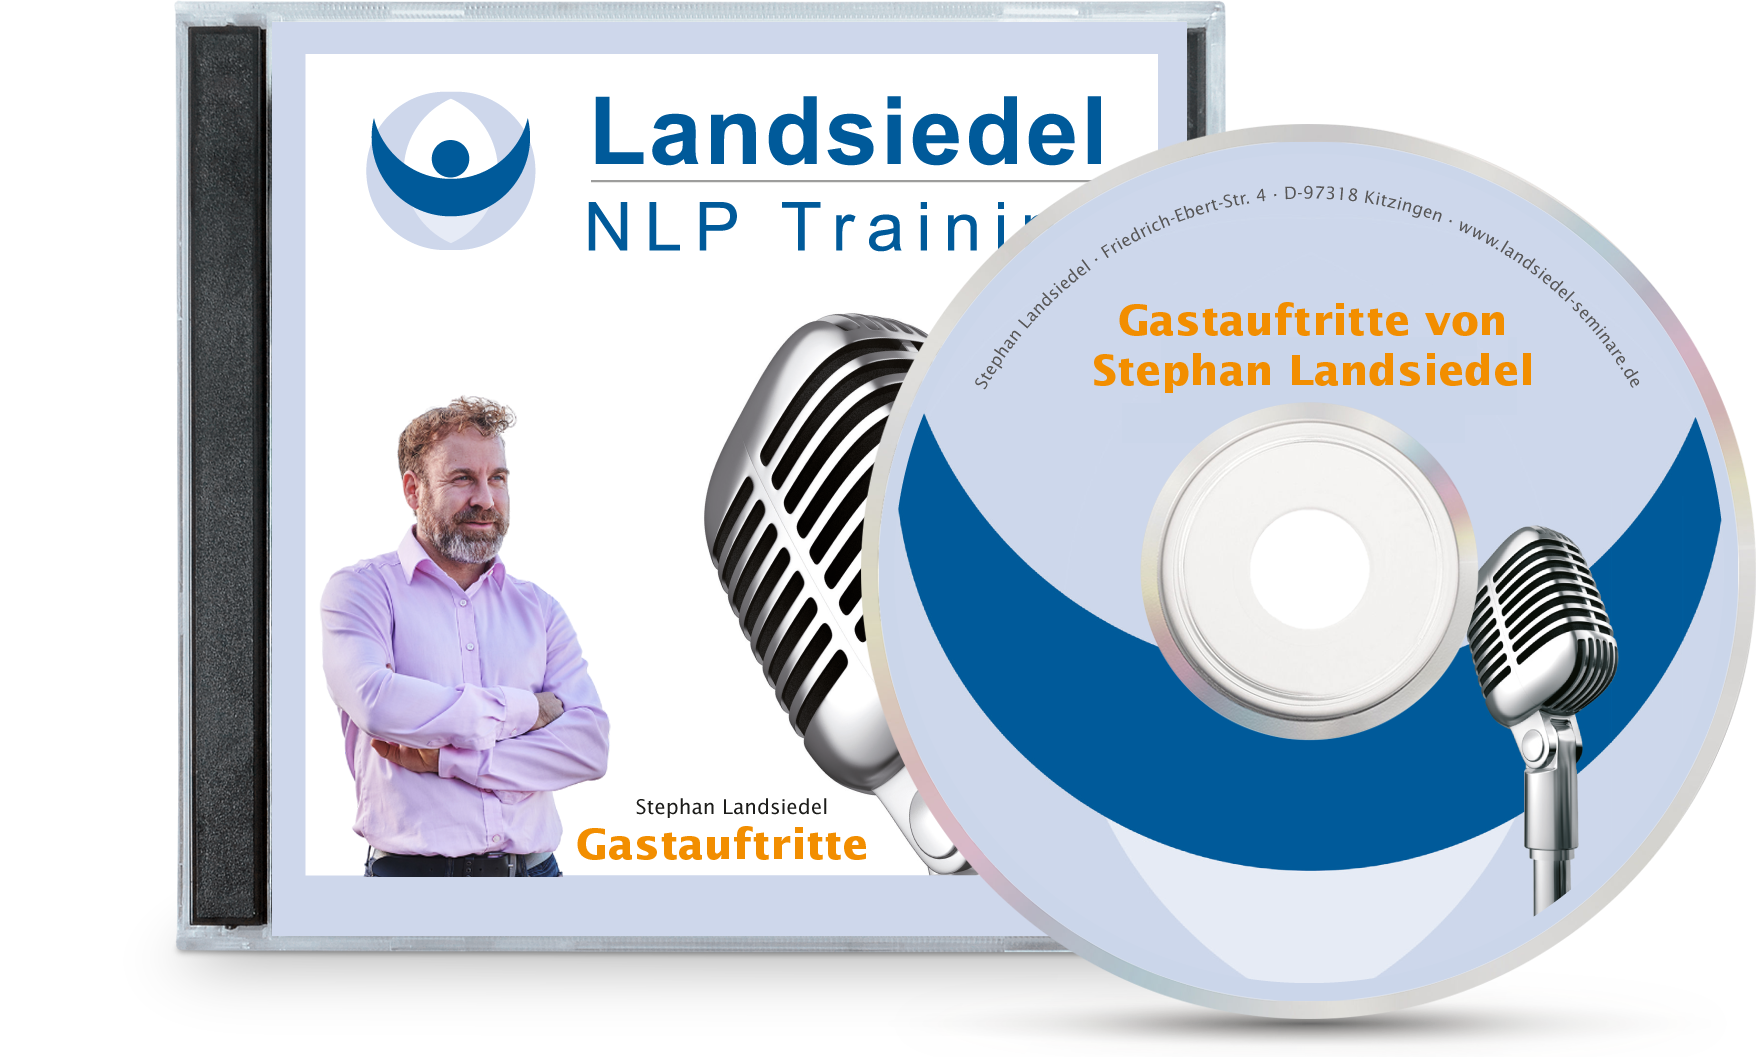 NLP Trainer Landsiedel